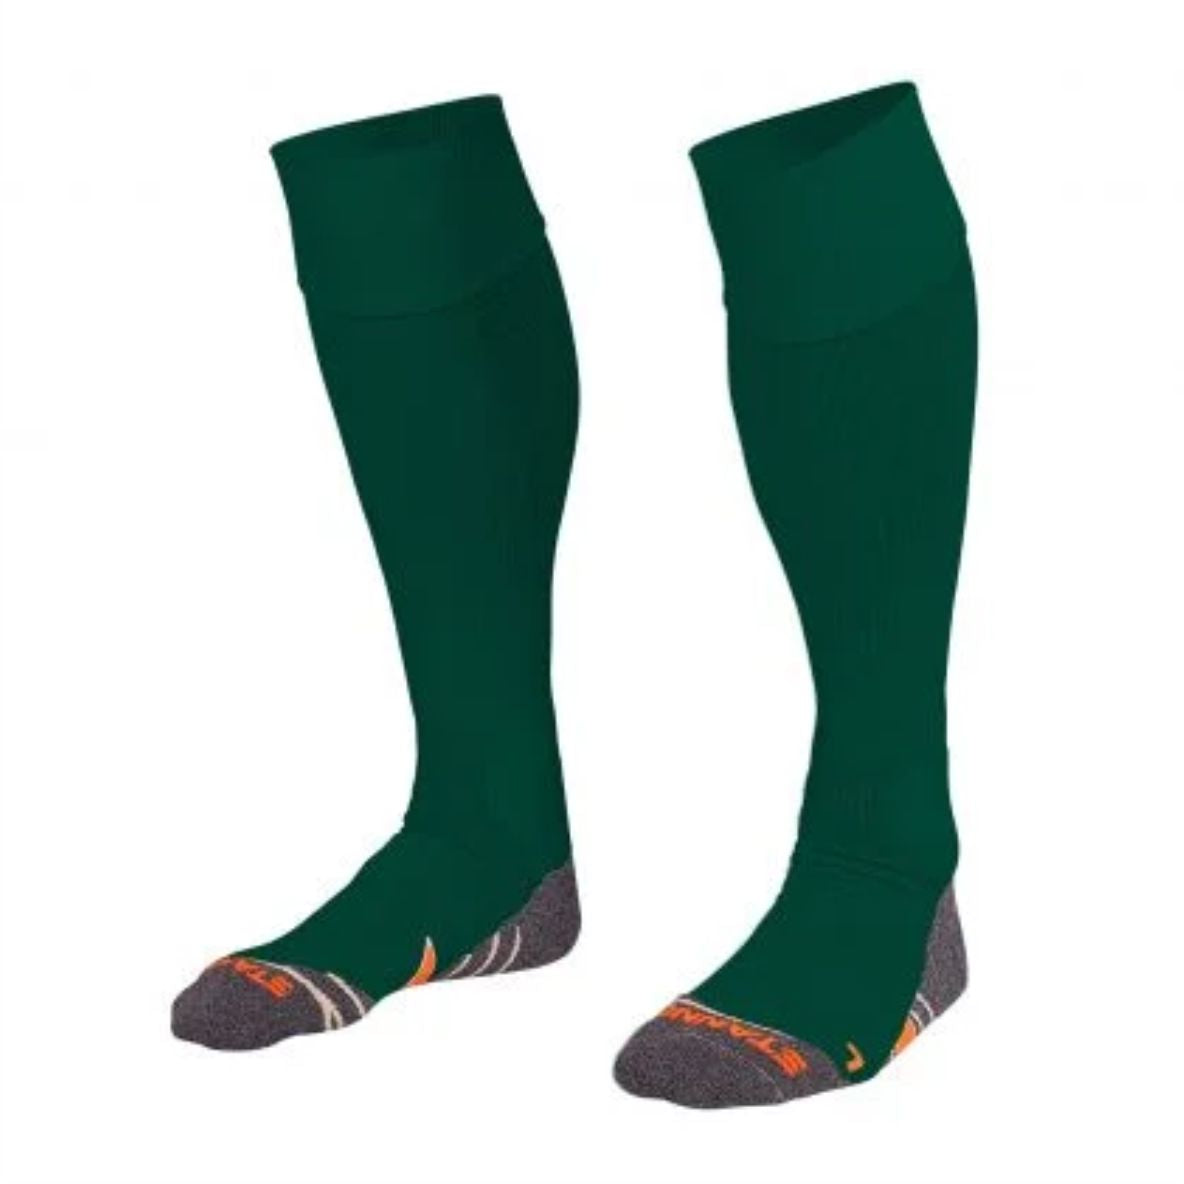 Stanno - Uni II Socks - Bottle Green - Adult